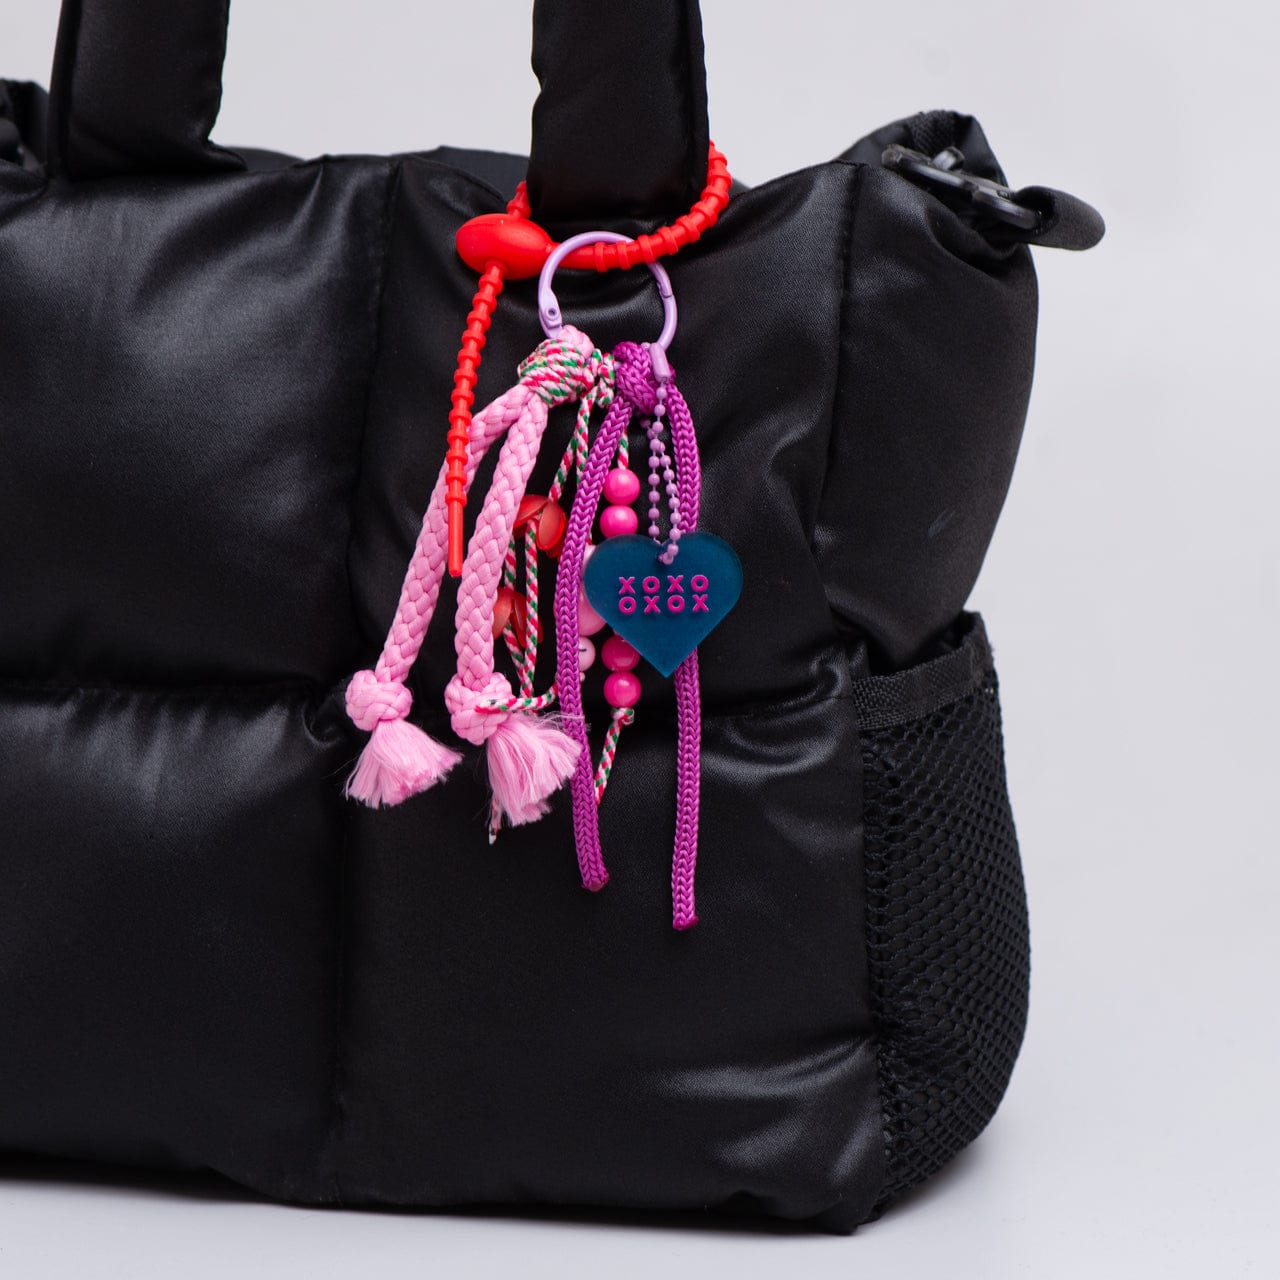 Adorable Projects Official Bag Charm Loubella Bag Charm Colorblock